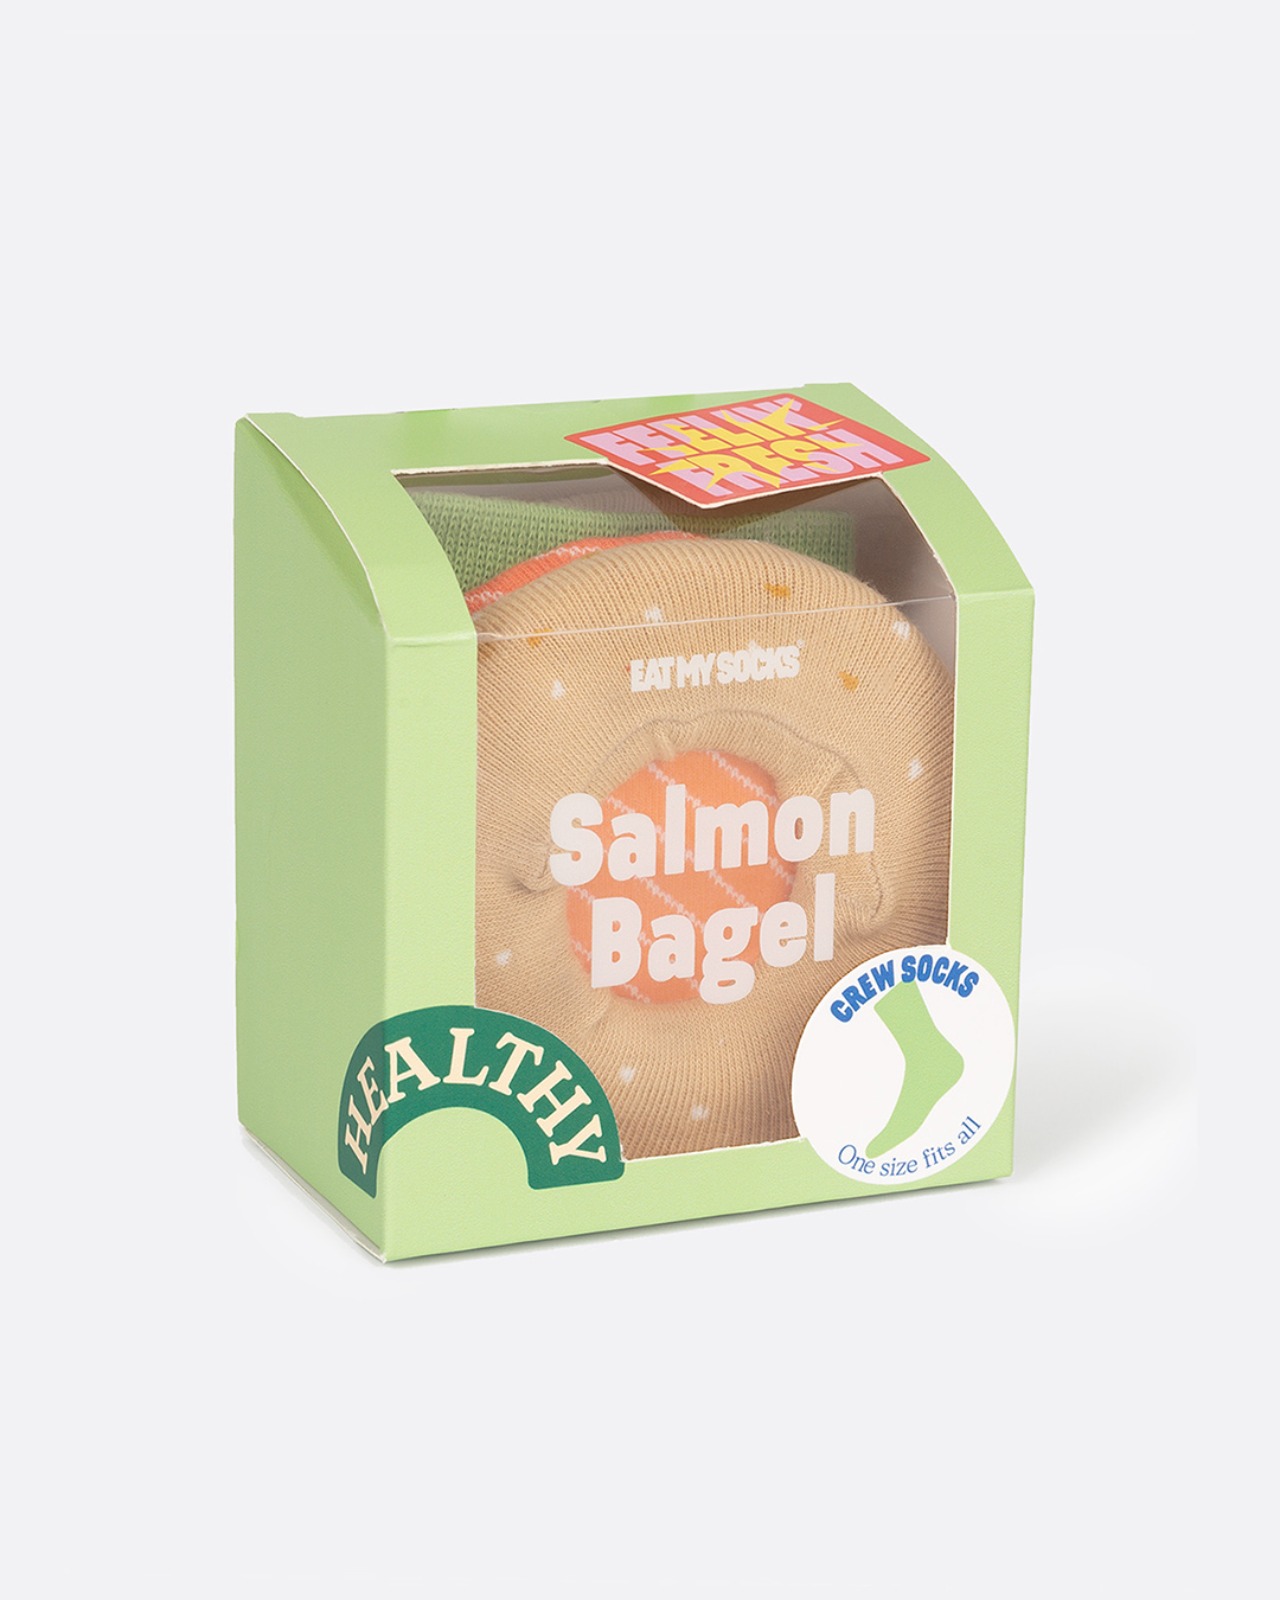 [EAT MY SOCKS] Salmon Bagel